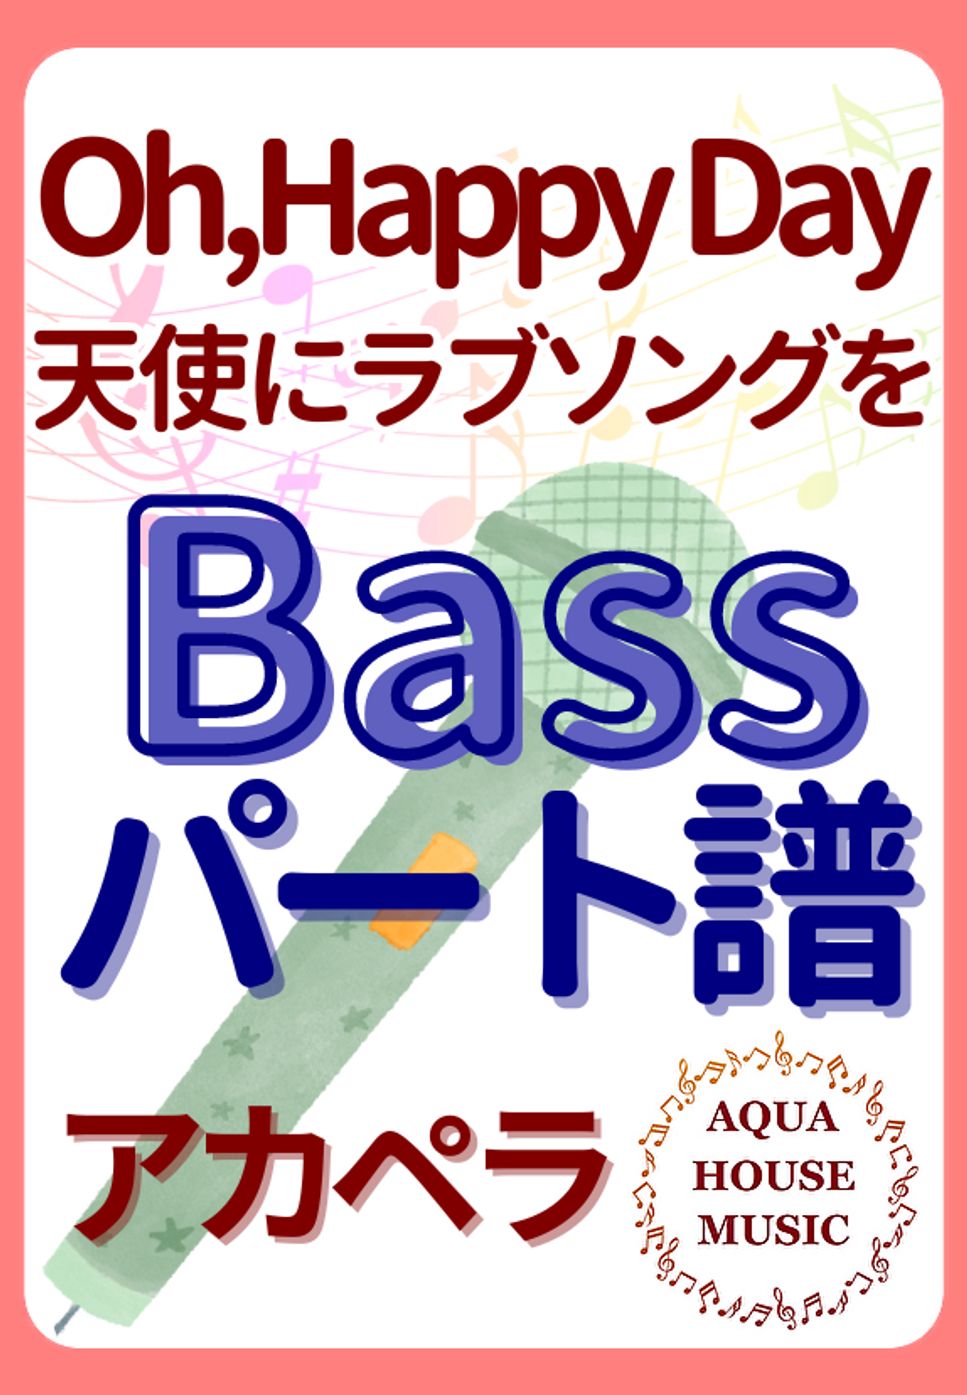 Oh, Happy Day (アカペラ楽譜♪Bassパート譜) by 飯田 亜紗子